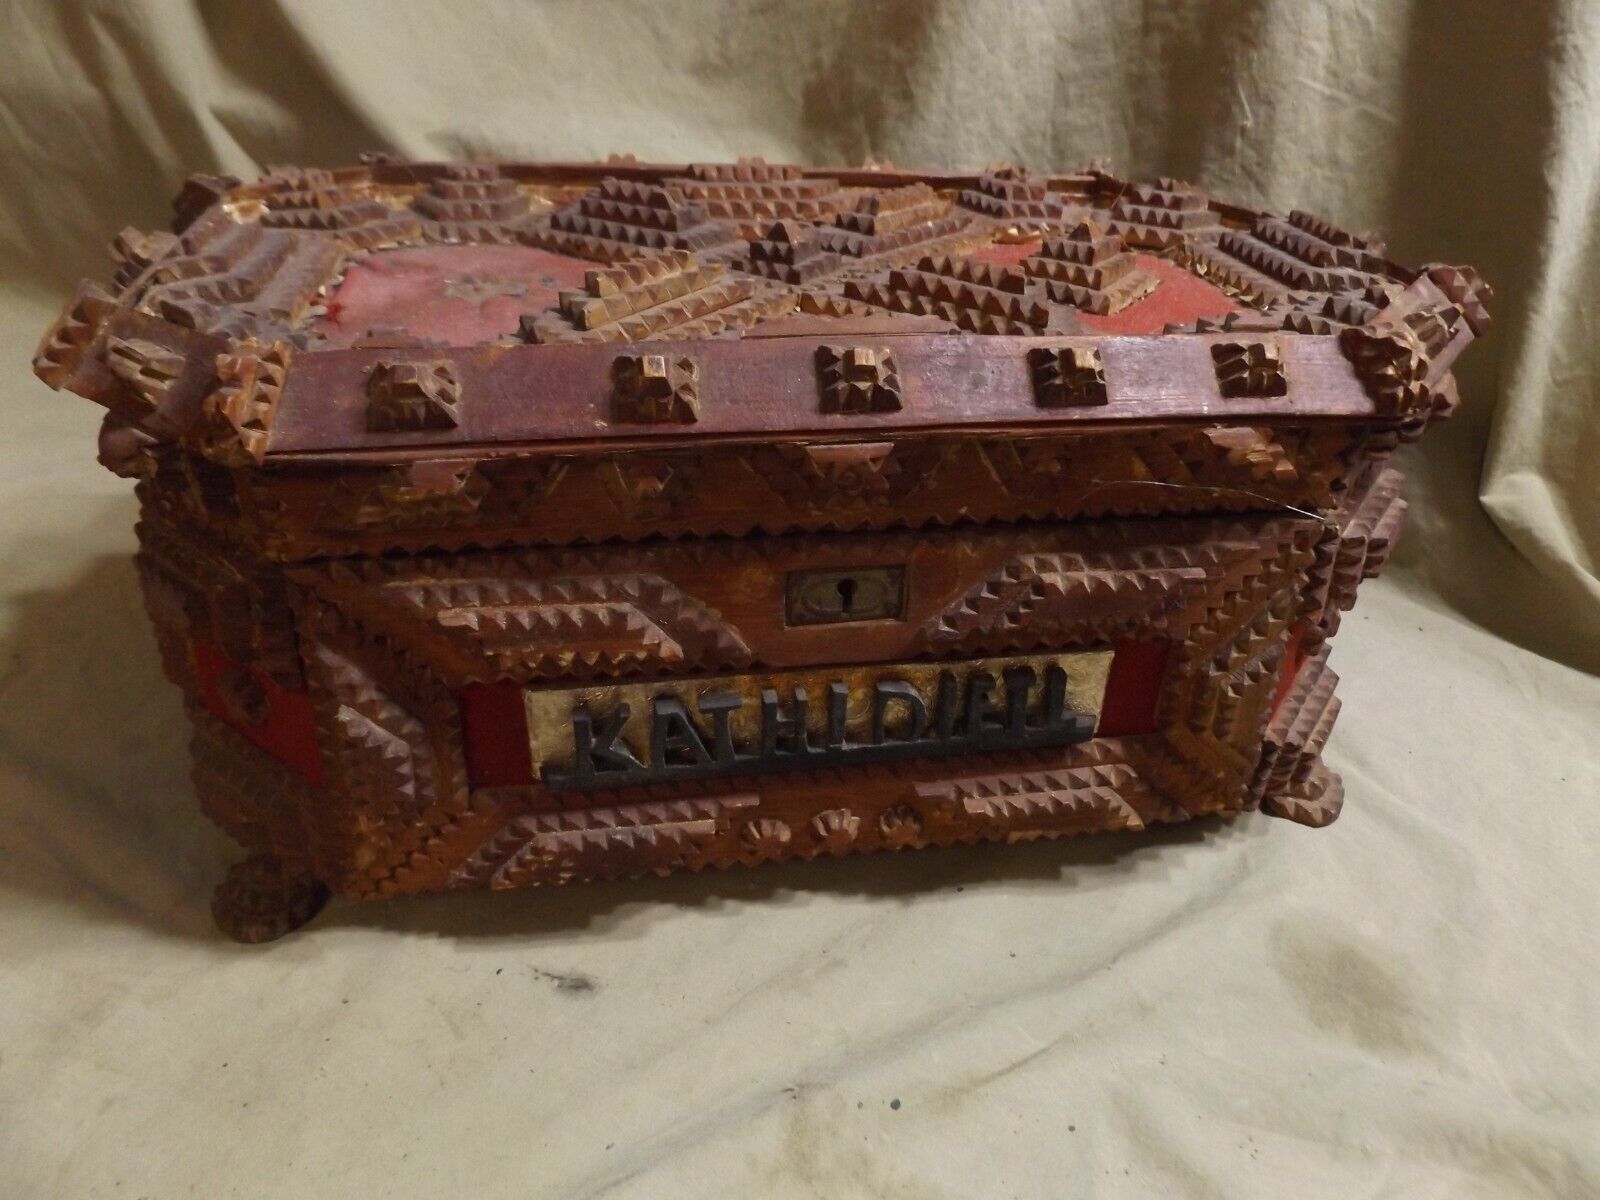 Antique Tramp Art Folk Art Handmade Jewelry Box w Losses Woman\'s Name needs work